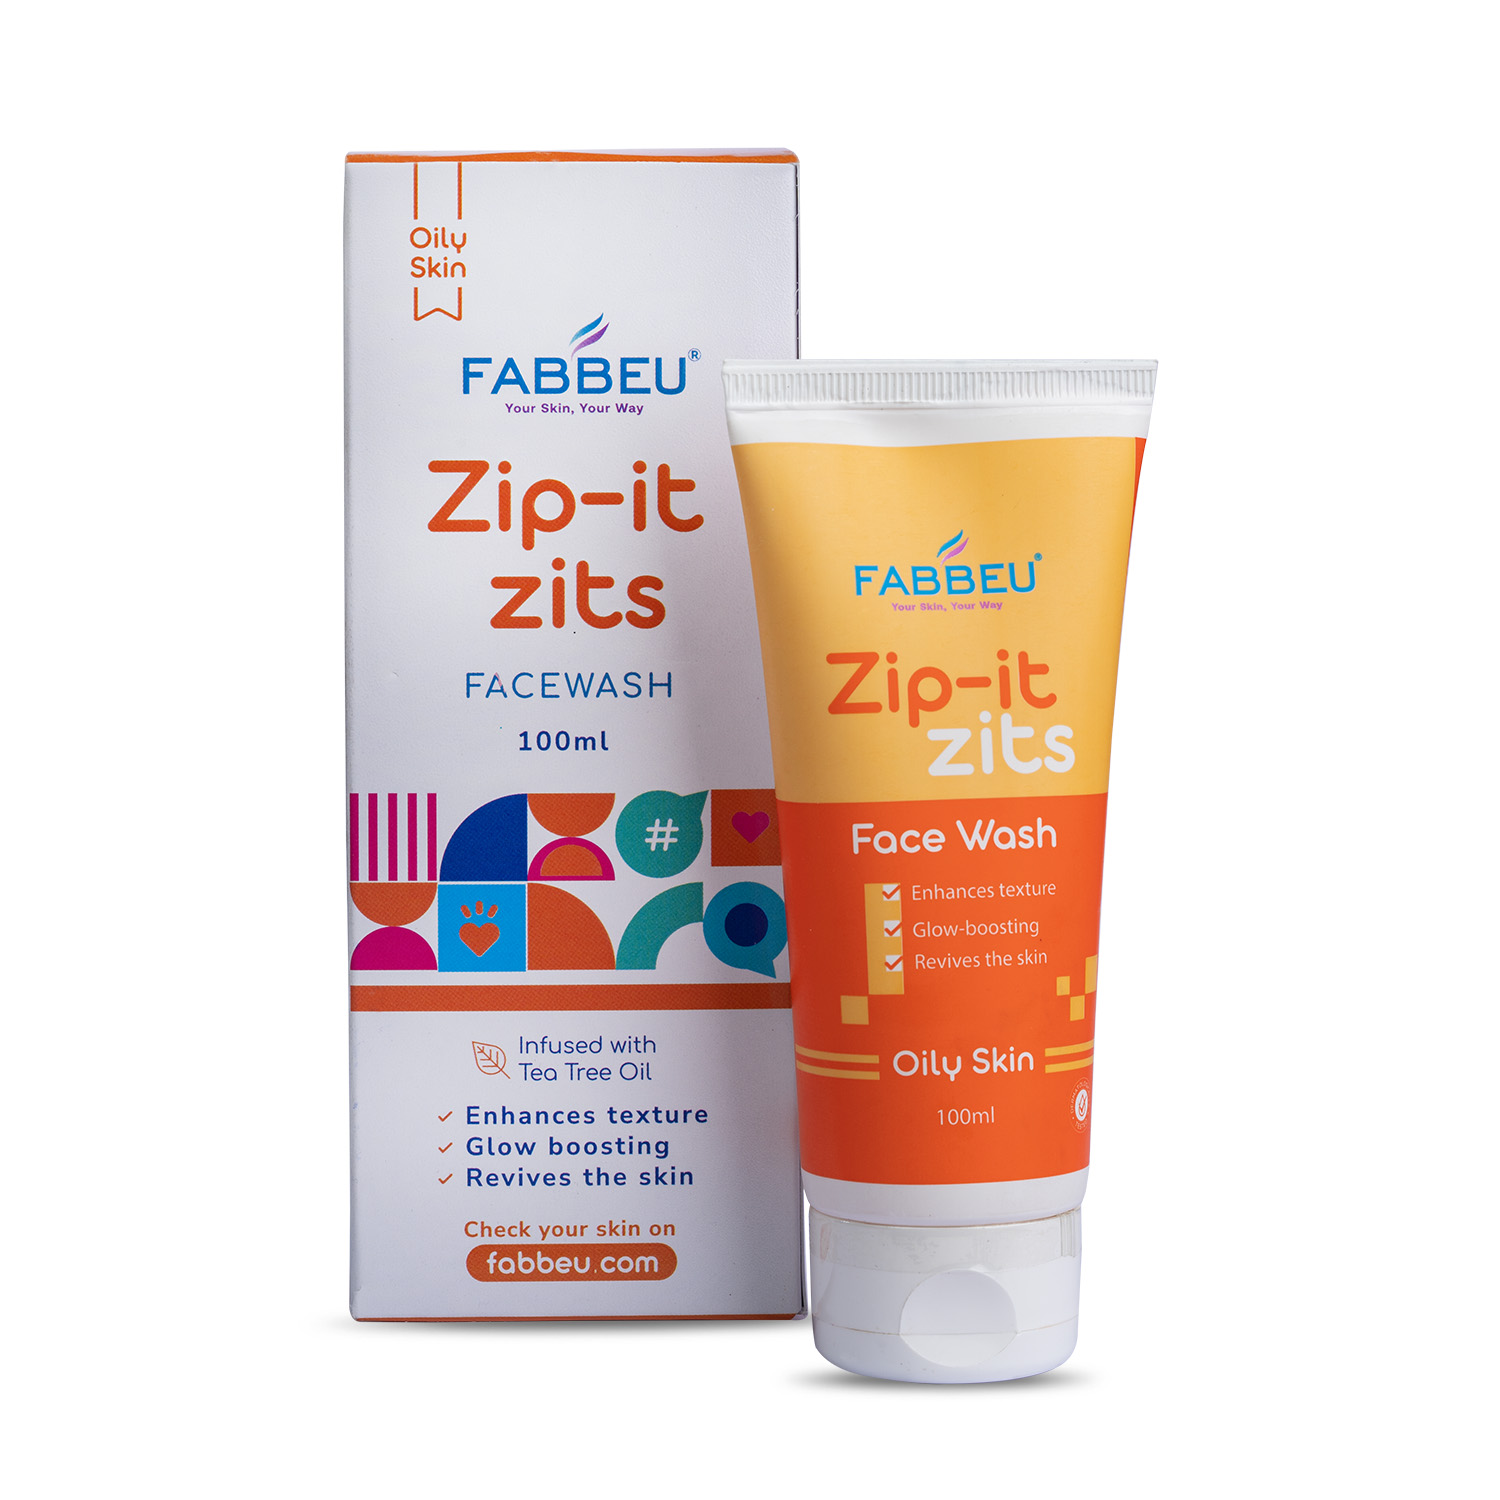 FABBEU Zip it Zits Face Wash For Oily Skin